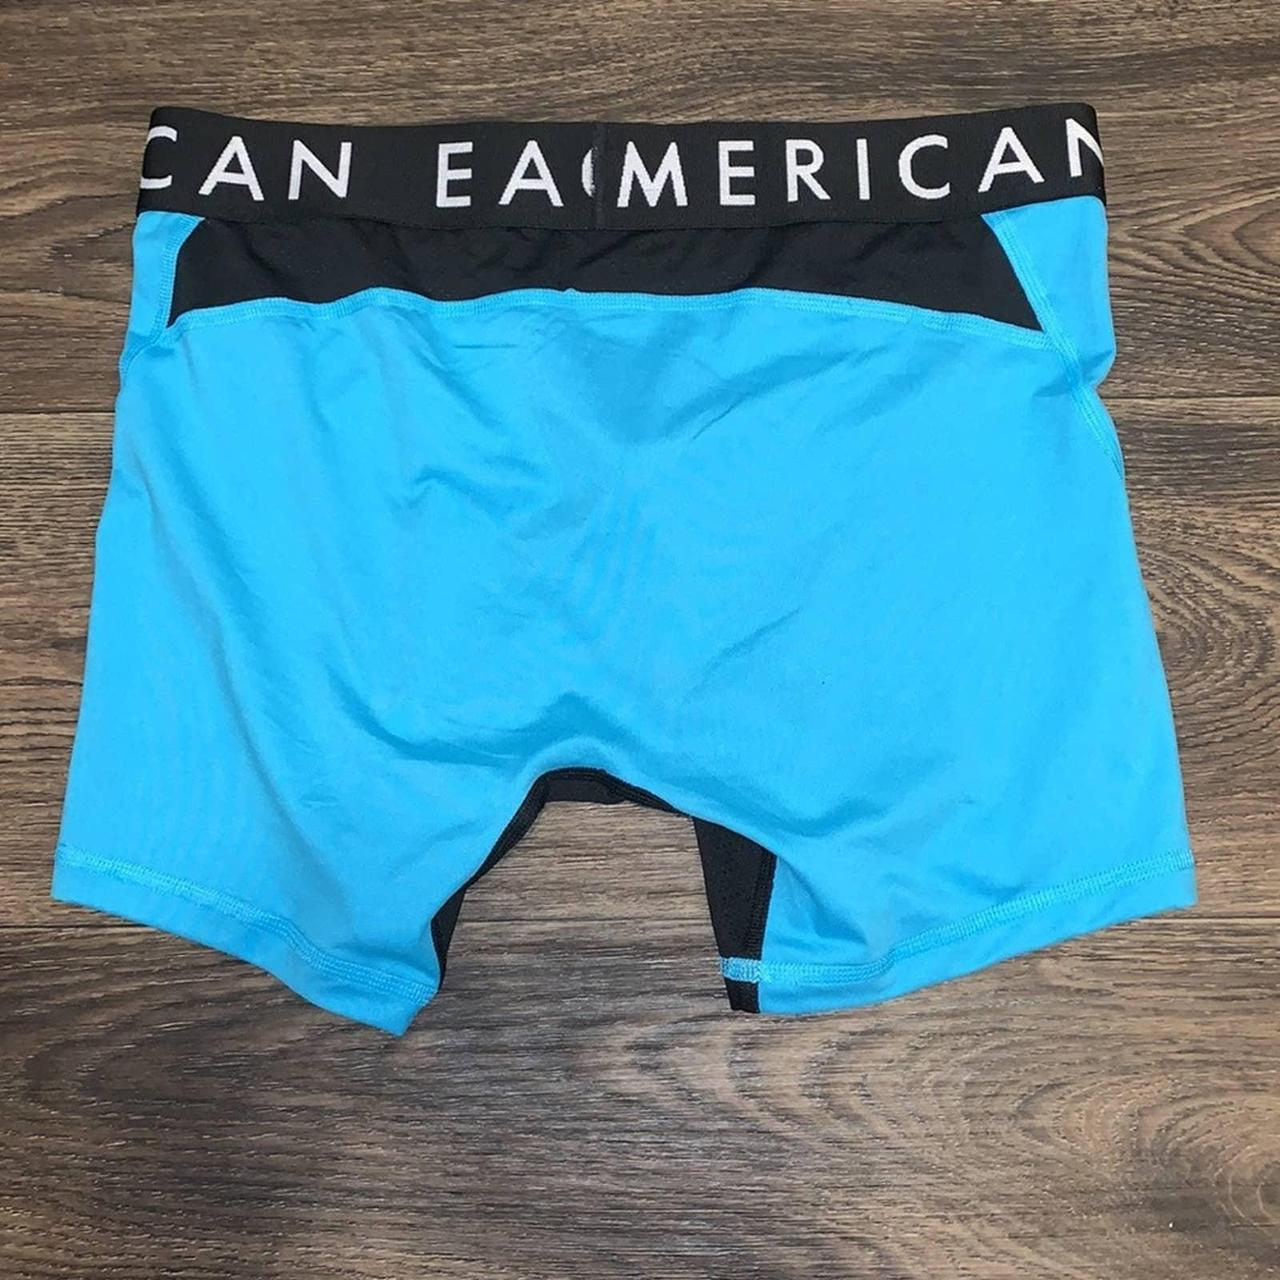 American Eagle Blue Boxer Brief - Underwear & Socks